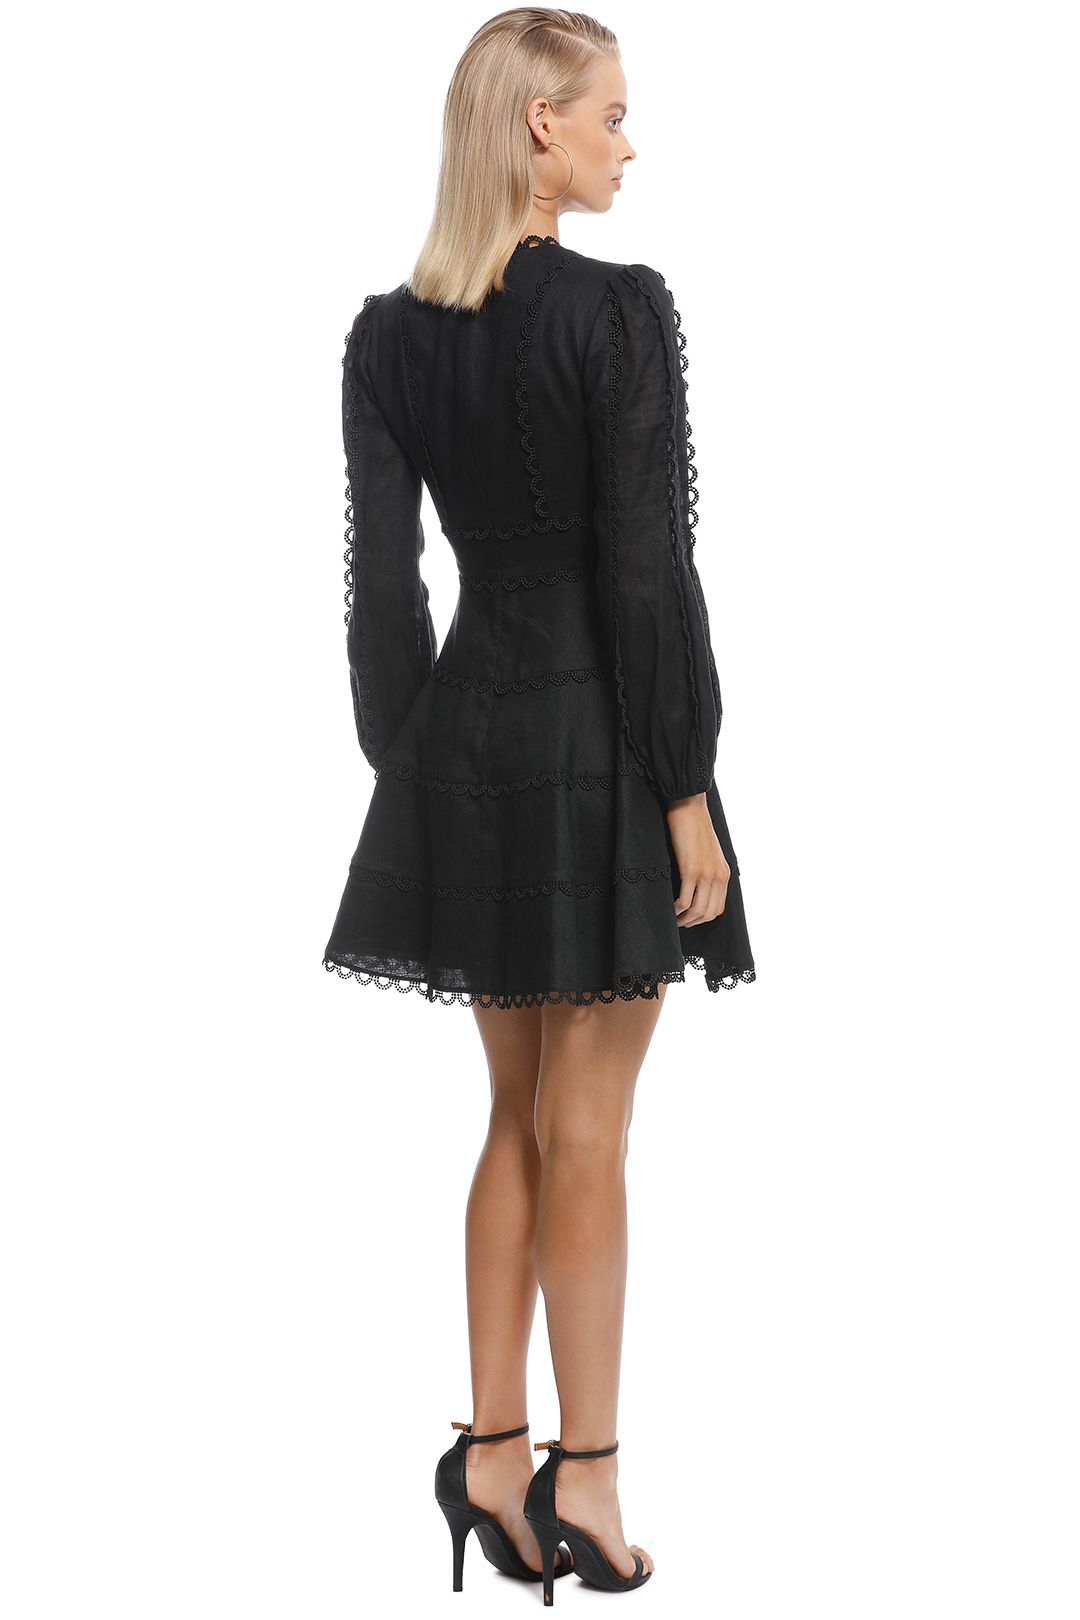 Zimmermann - Heathers Flounce Short Dress - Black - Back